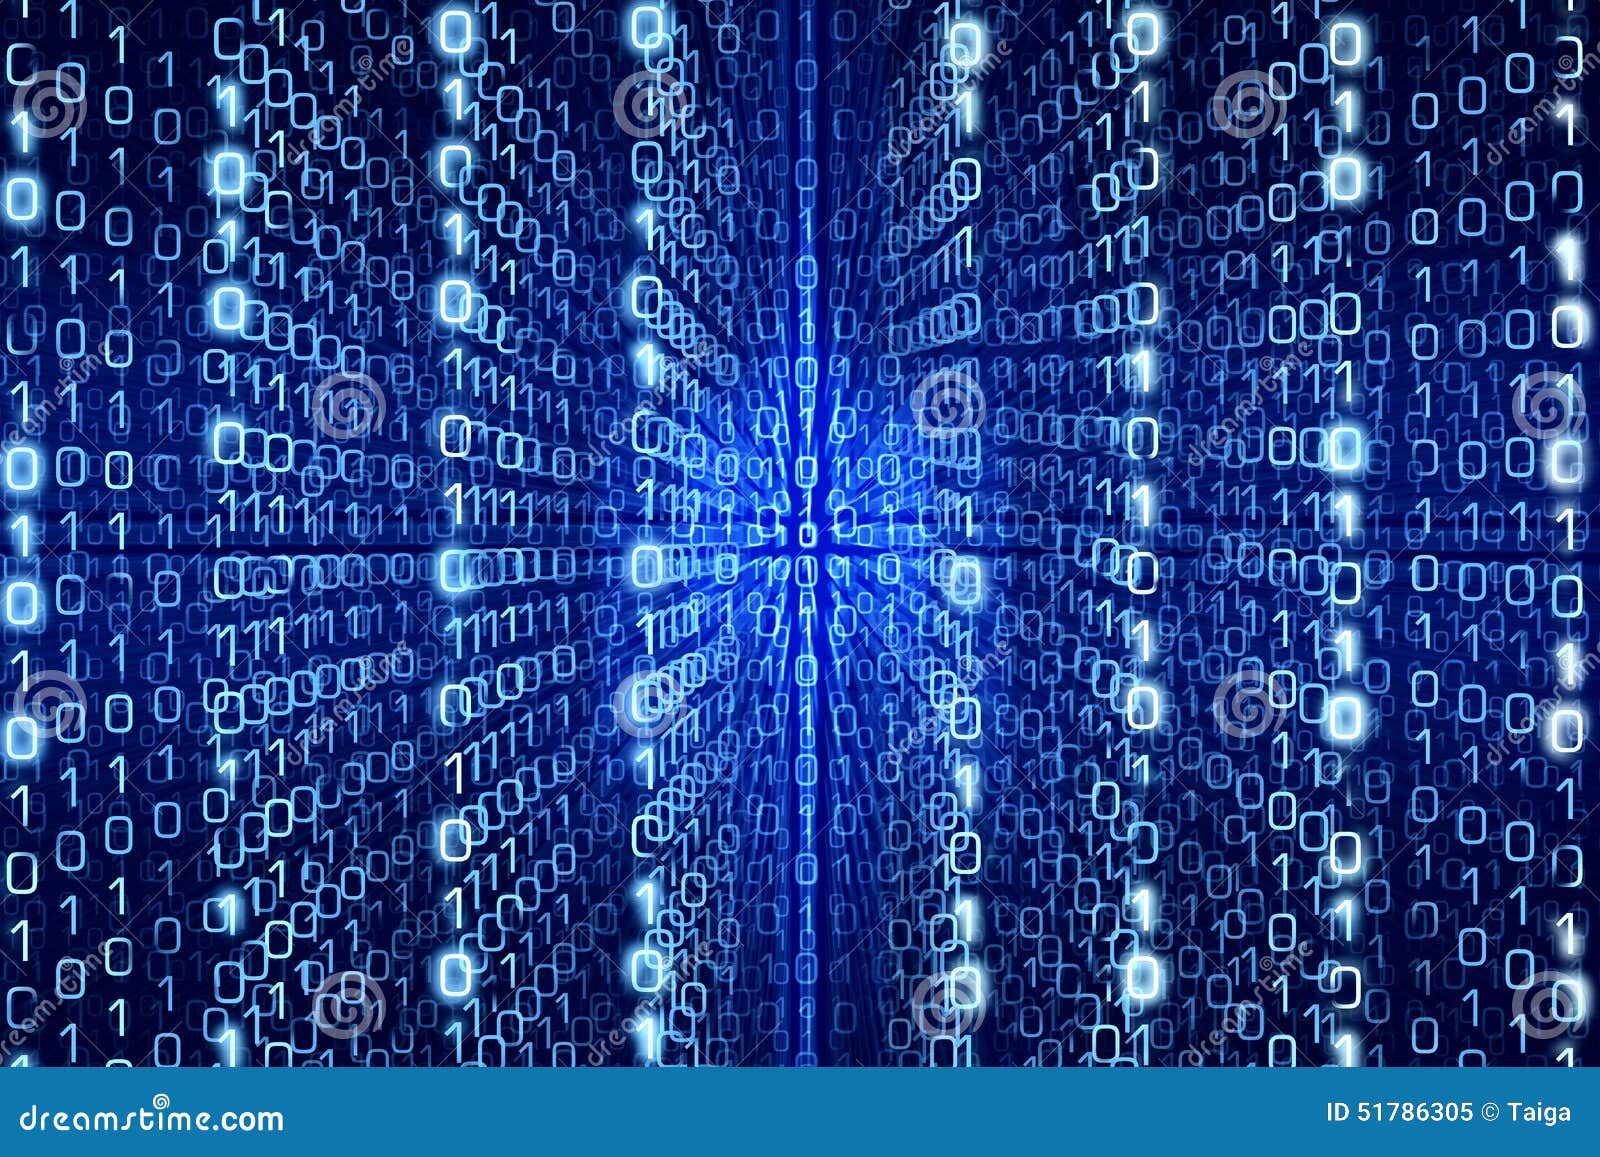 blue matrix abstract digital background